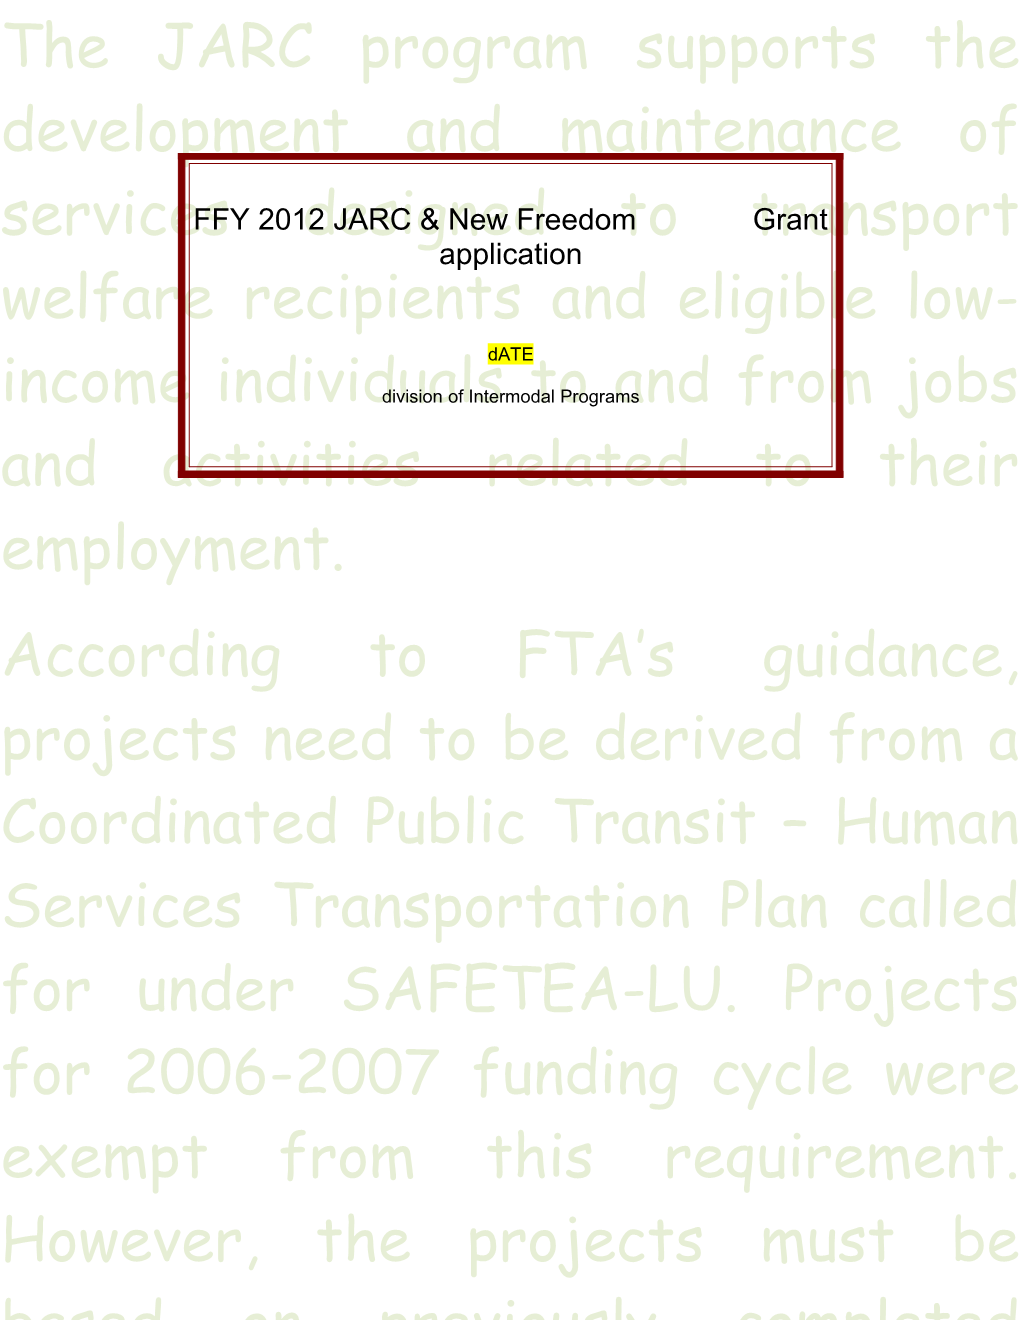 FFY 2011 JARC & New Freedom Grant Application